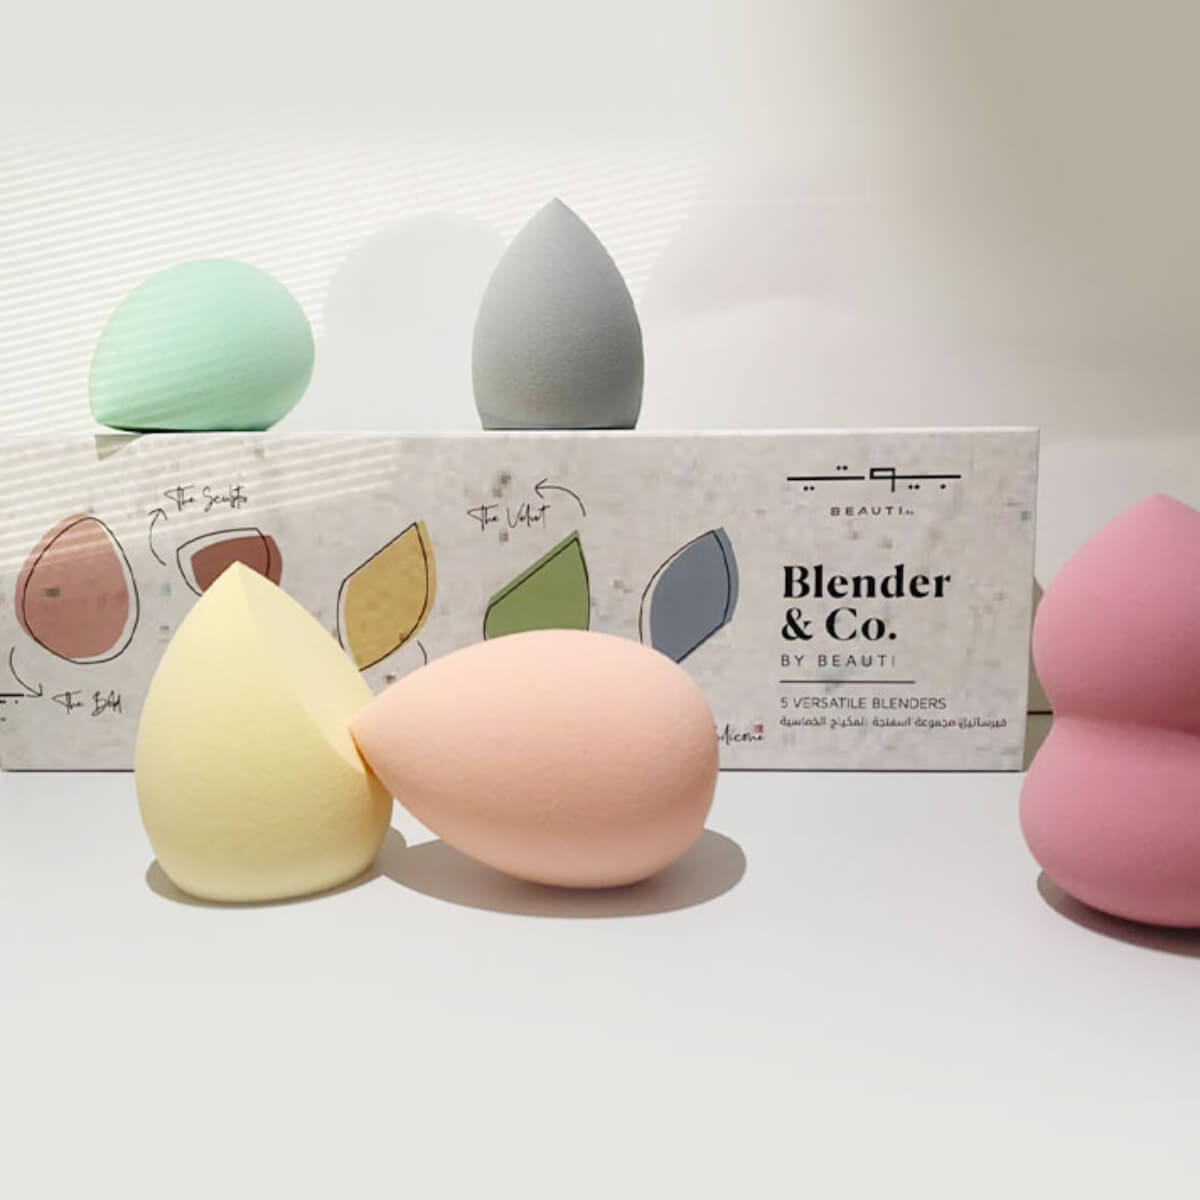 Blender & Co. by BEAUTI - 5 Versatile Blenders Sponge